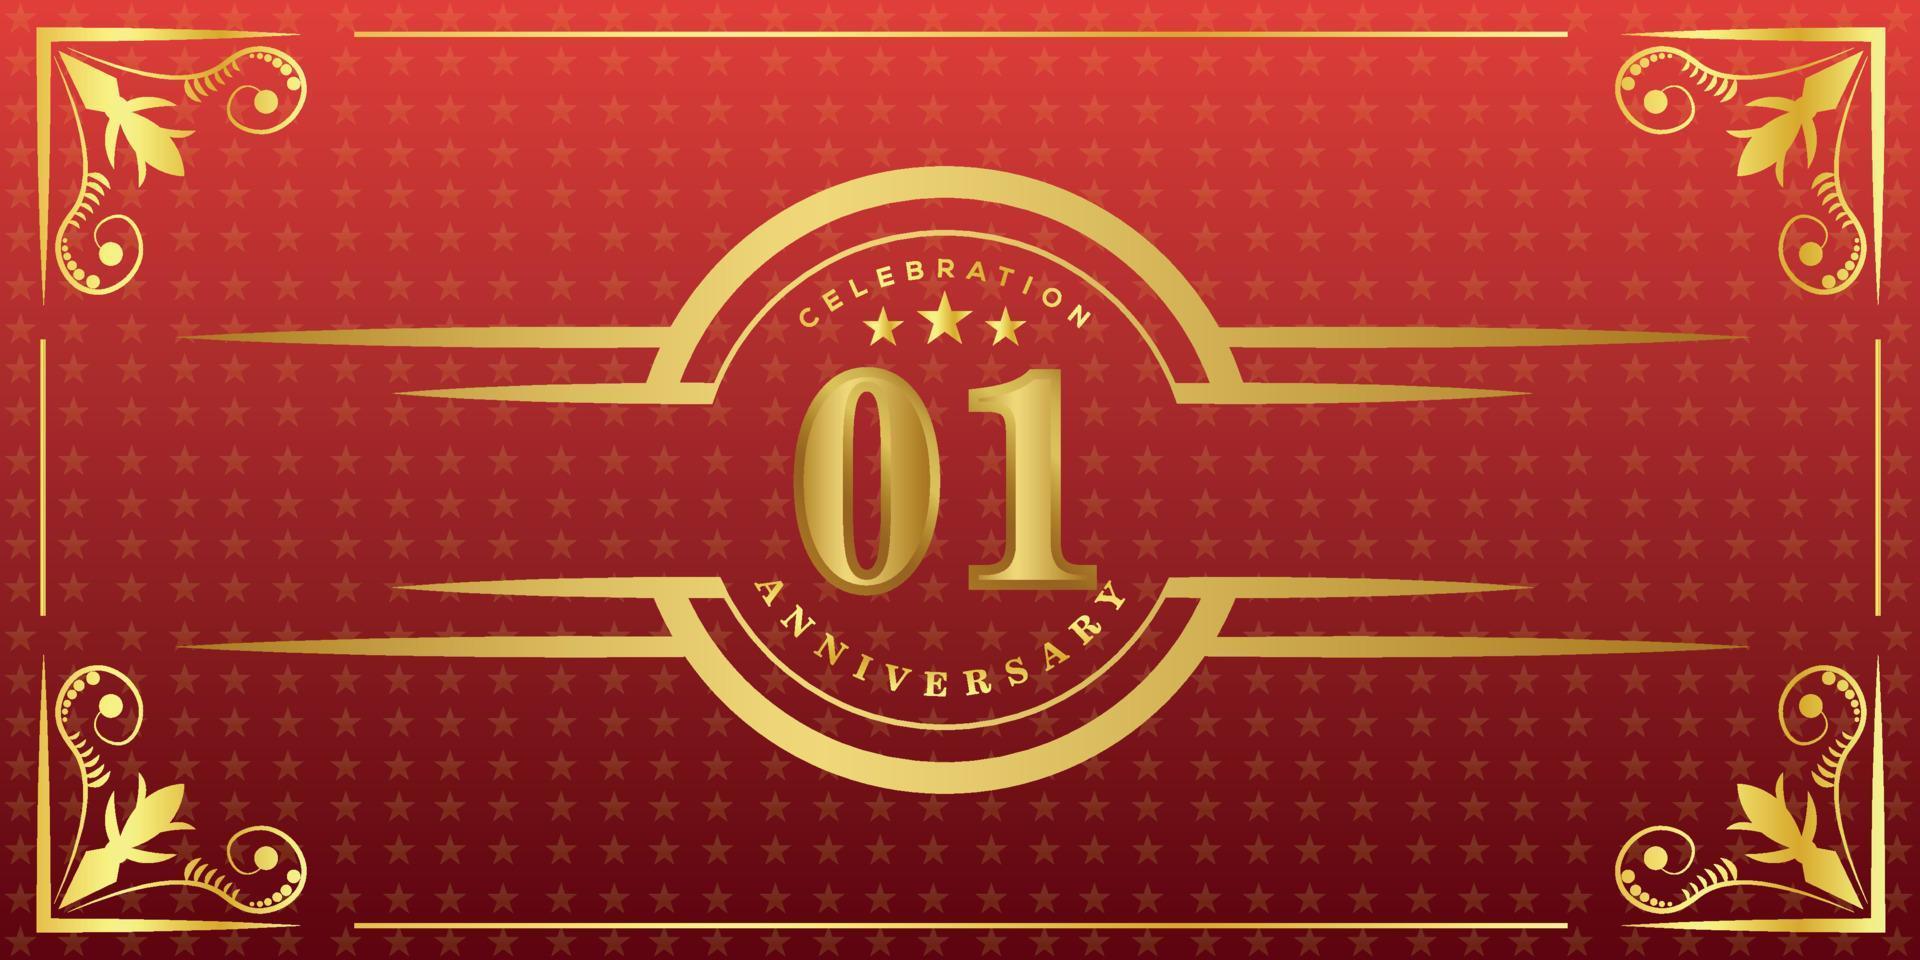 01e verjaardag logo met gouden ring, confetti en goud grens geïsoleerd Aan elegant rood achtergrond, fonkeling, vector ontwerp voor groet kaart en uitnodiging kaart